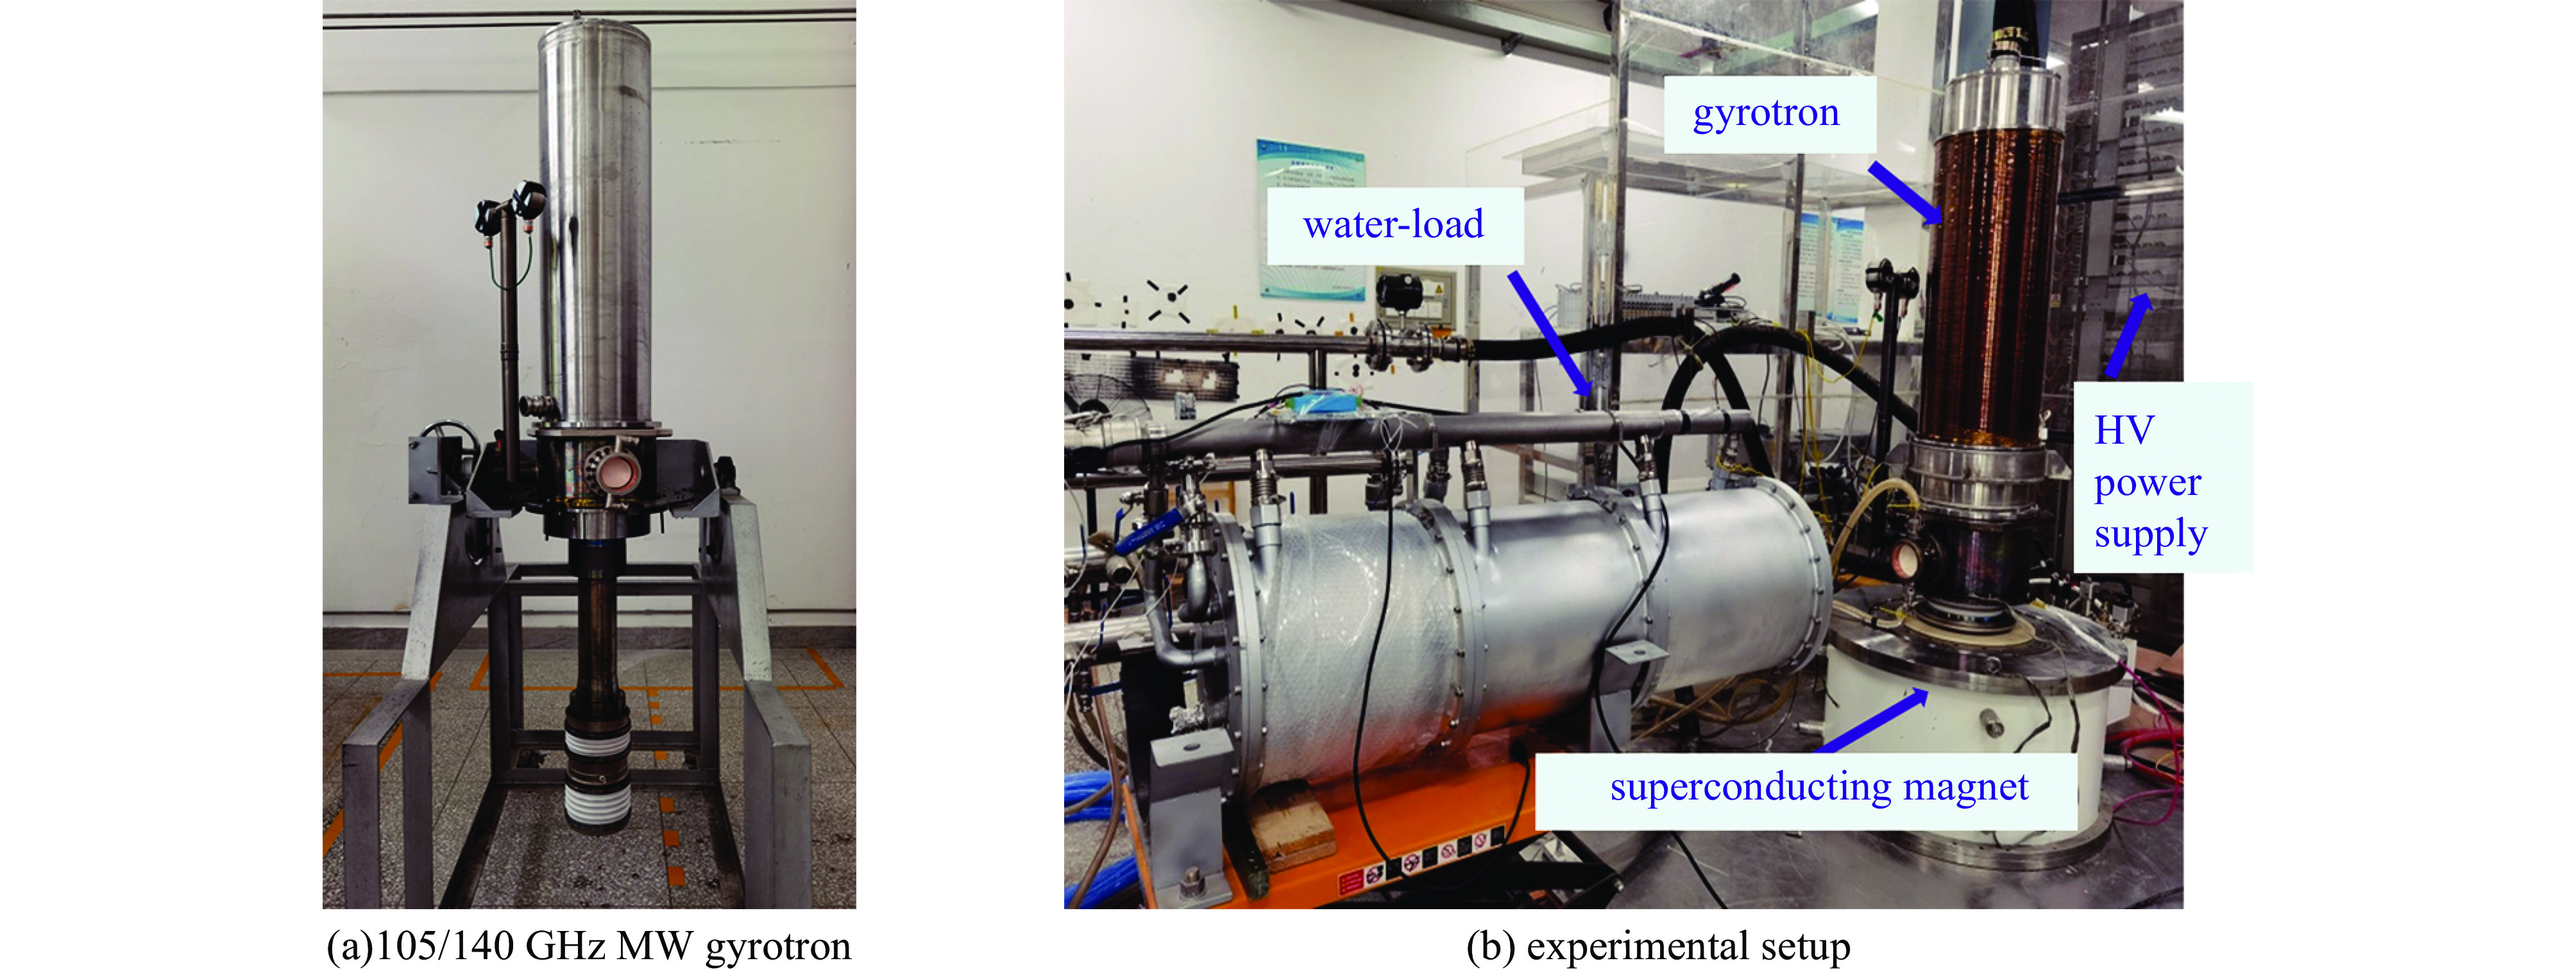 Photographs of the 105/140 GHz MW gyrotron and experimental setup